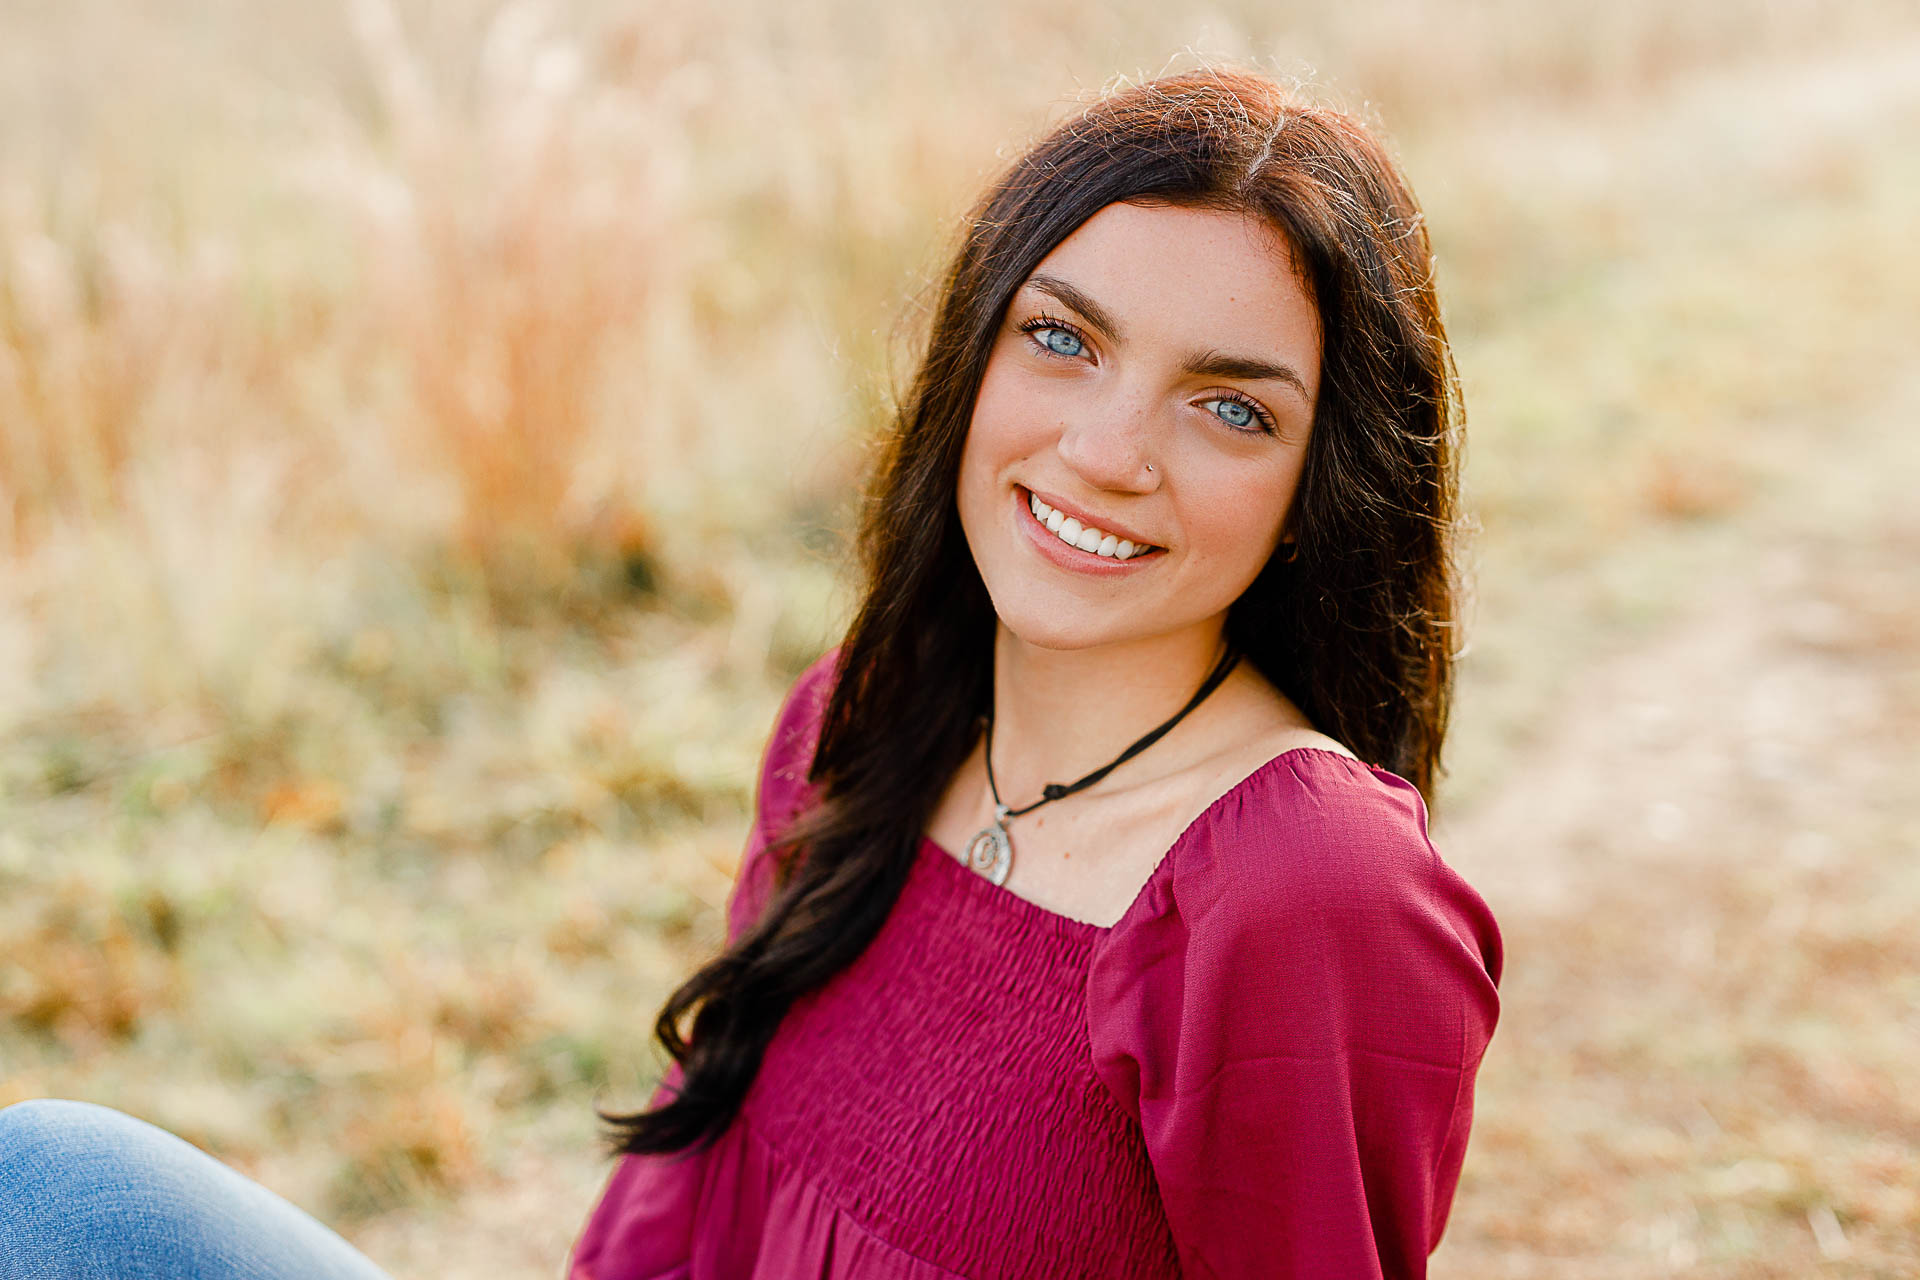 Photo by Duxbury senior photographer Christina Runnals | A high school senior girl with big blue eyes sitting in a field smiling